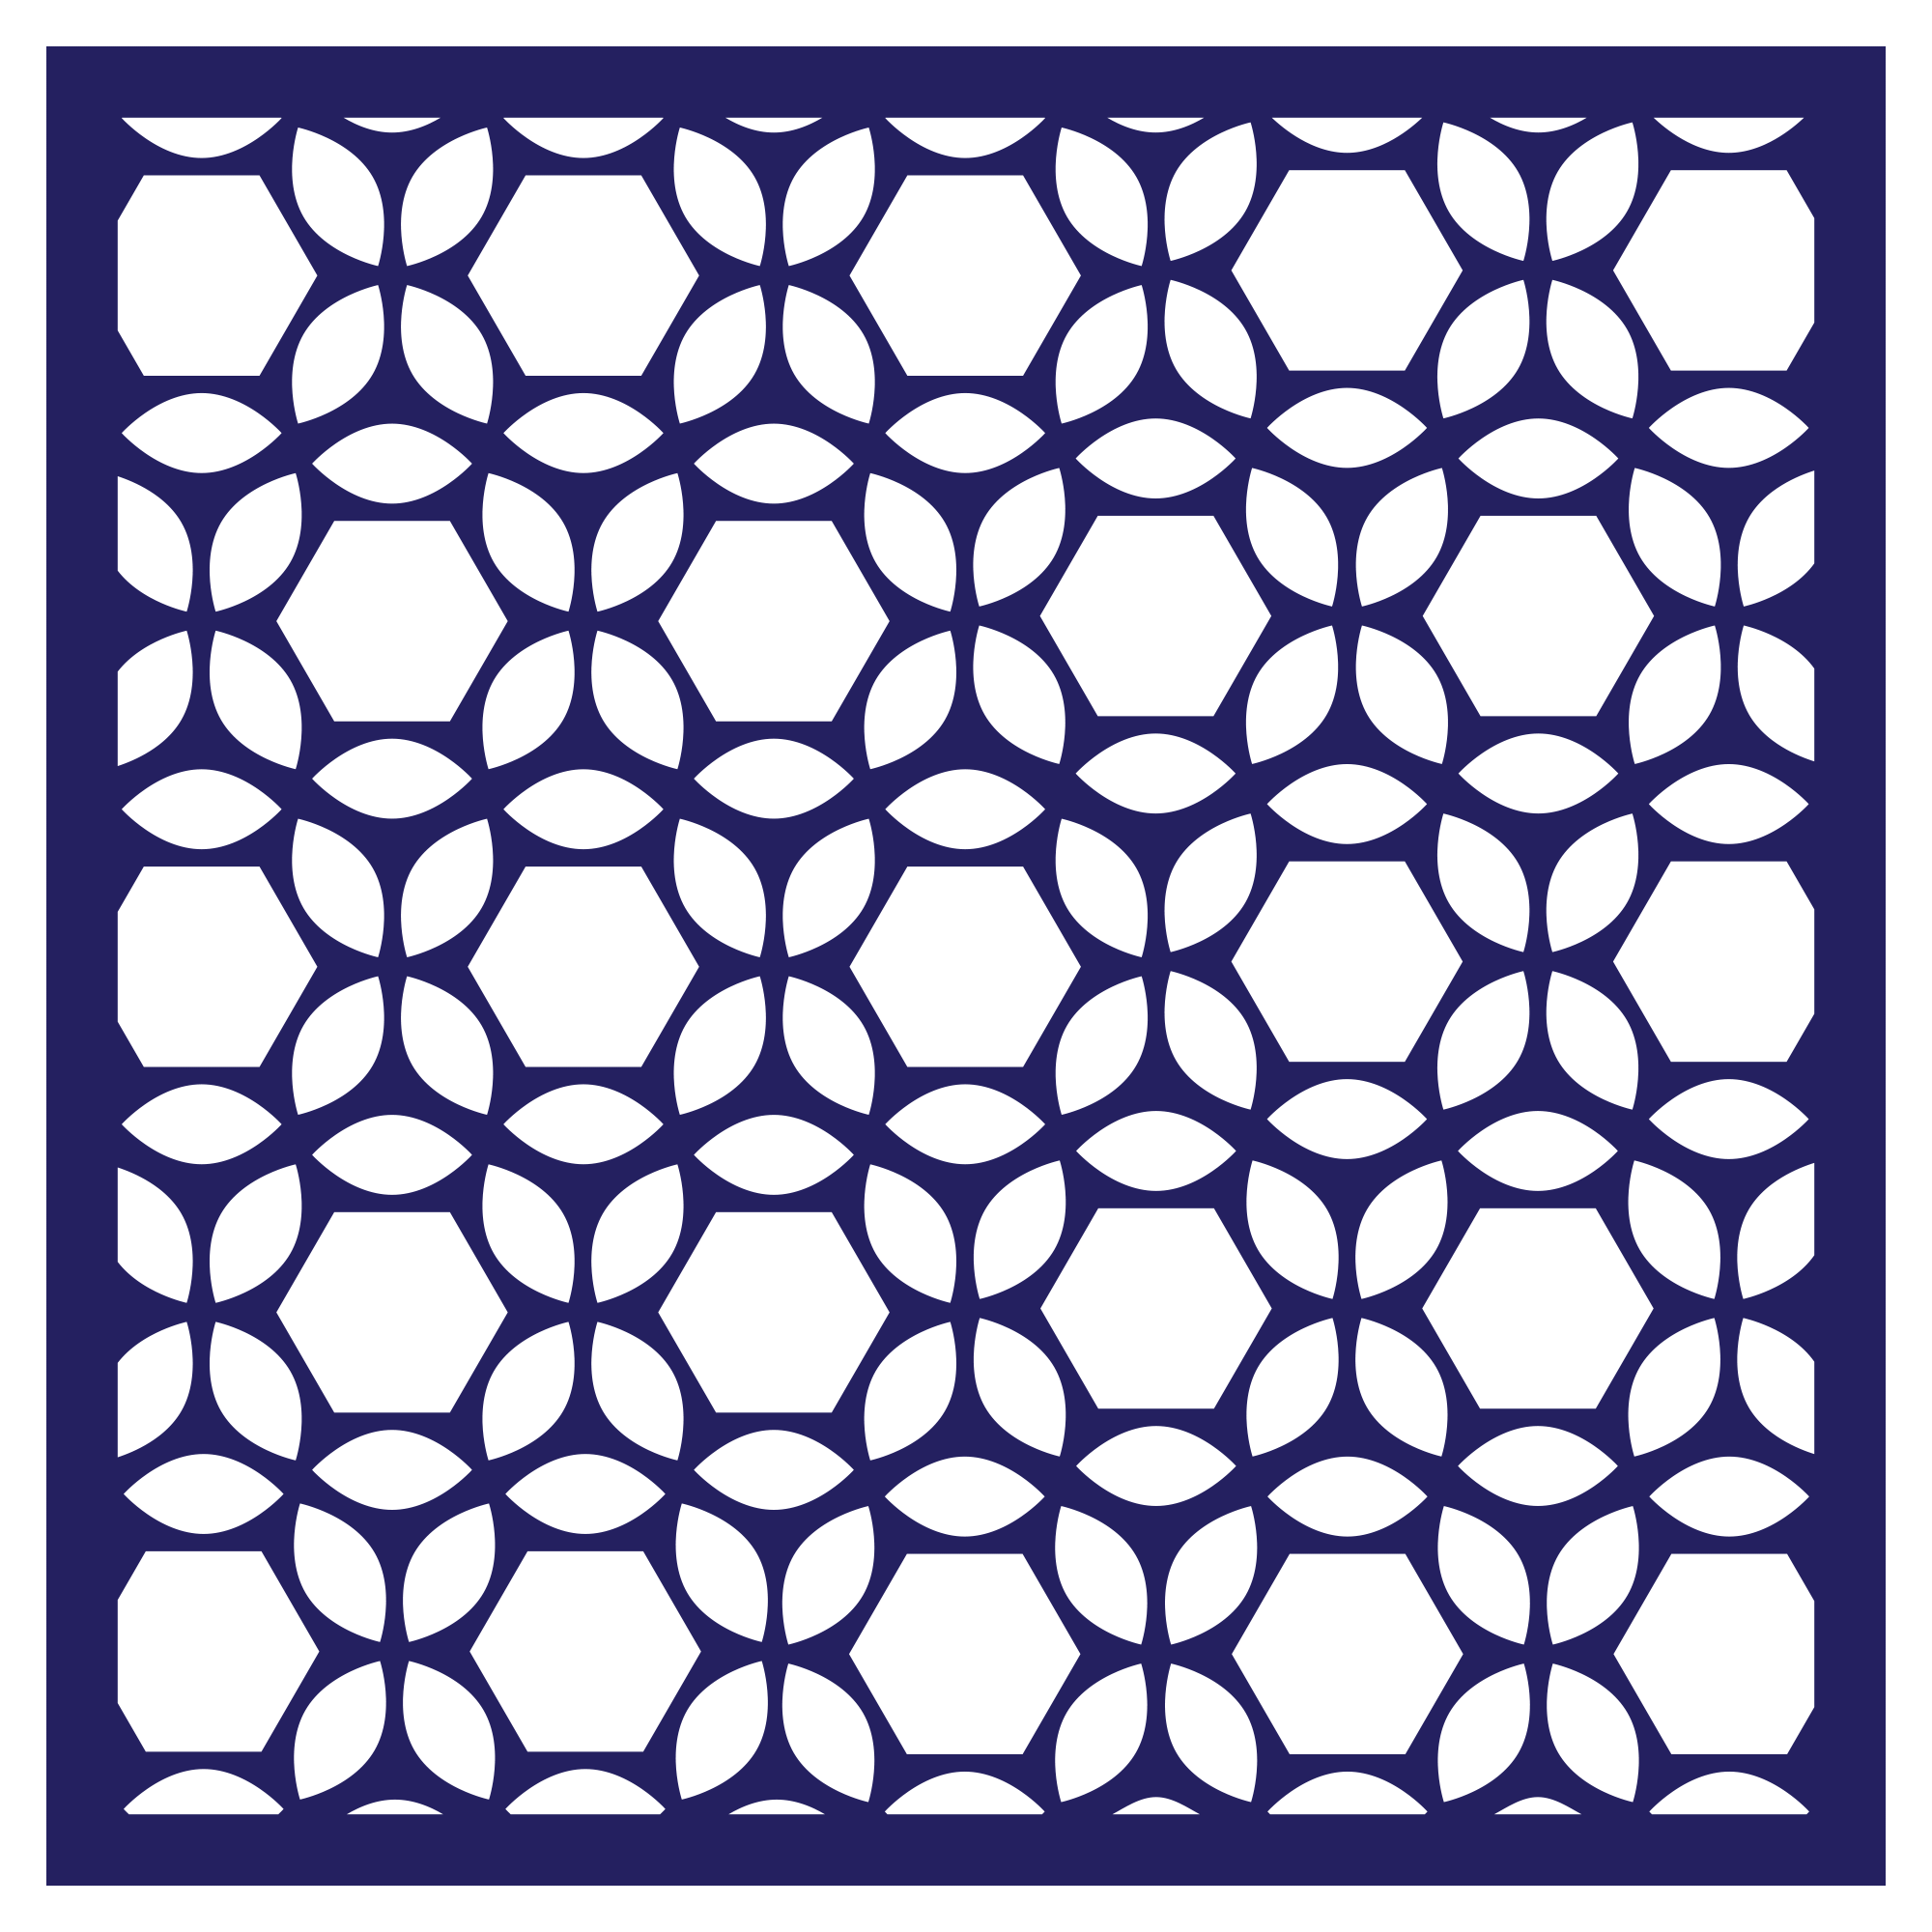 Hexagonal Petals Card Base / Background / Stencil by Clikchic Designs